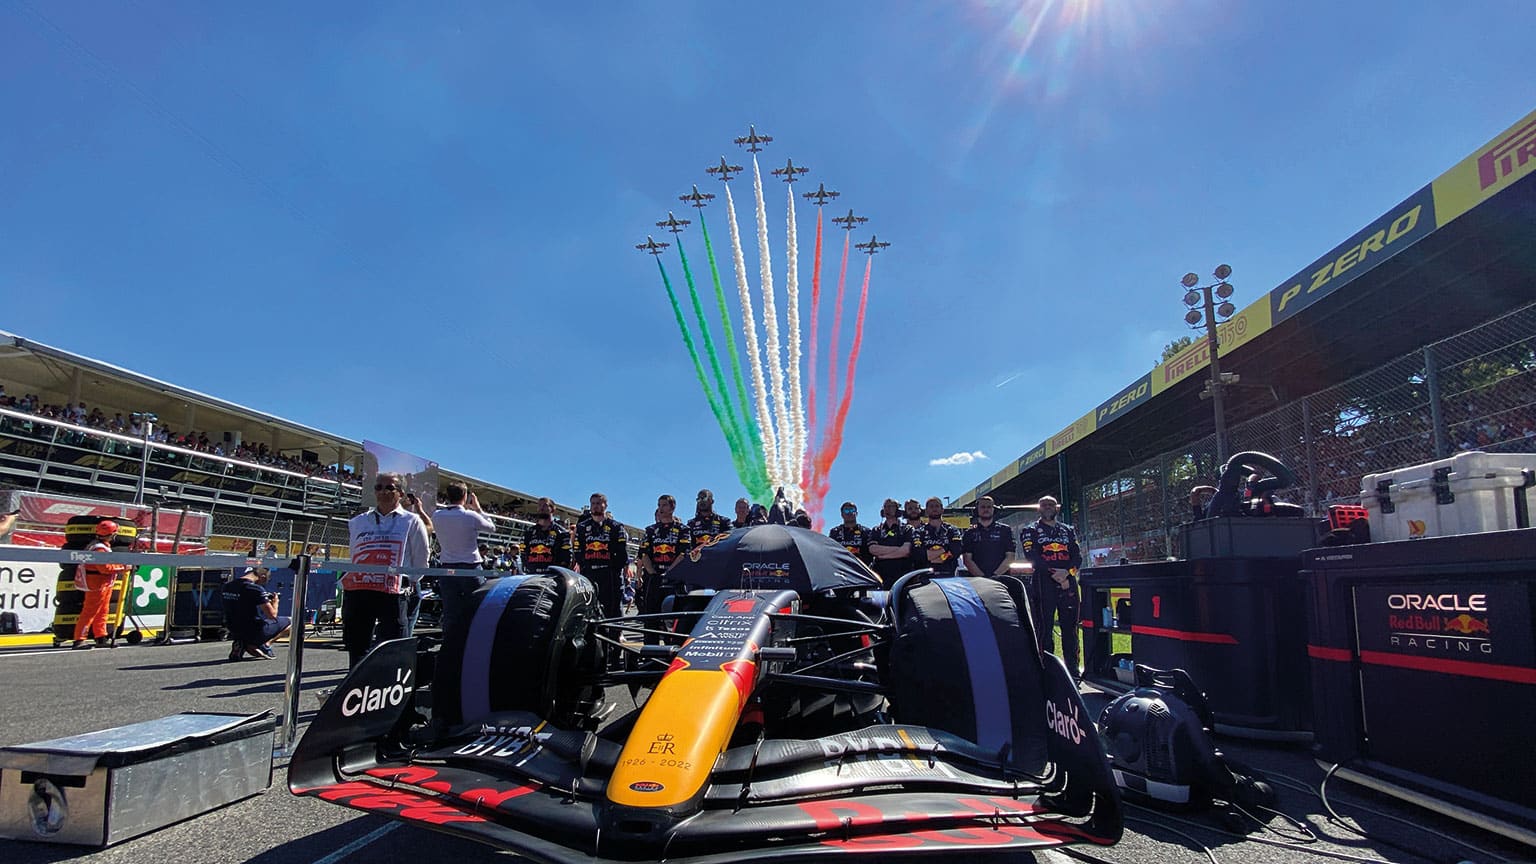 Flypast over the 2022 Italian Grand Prix grid